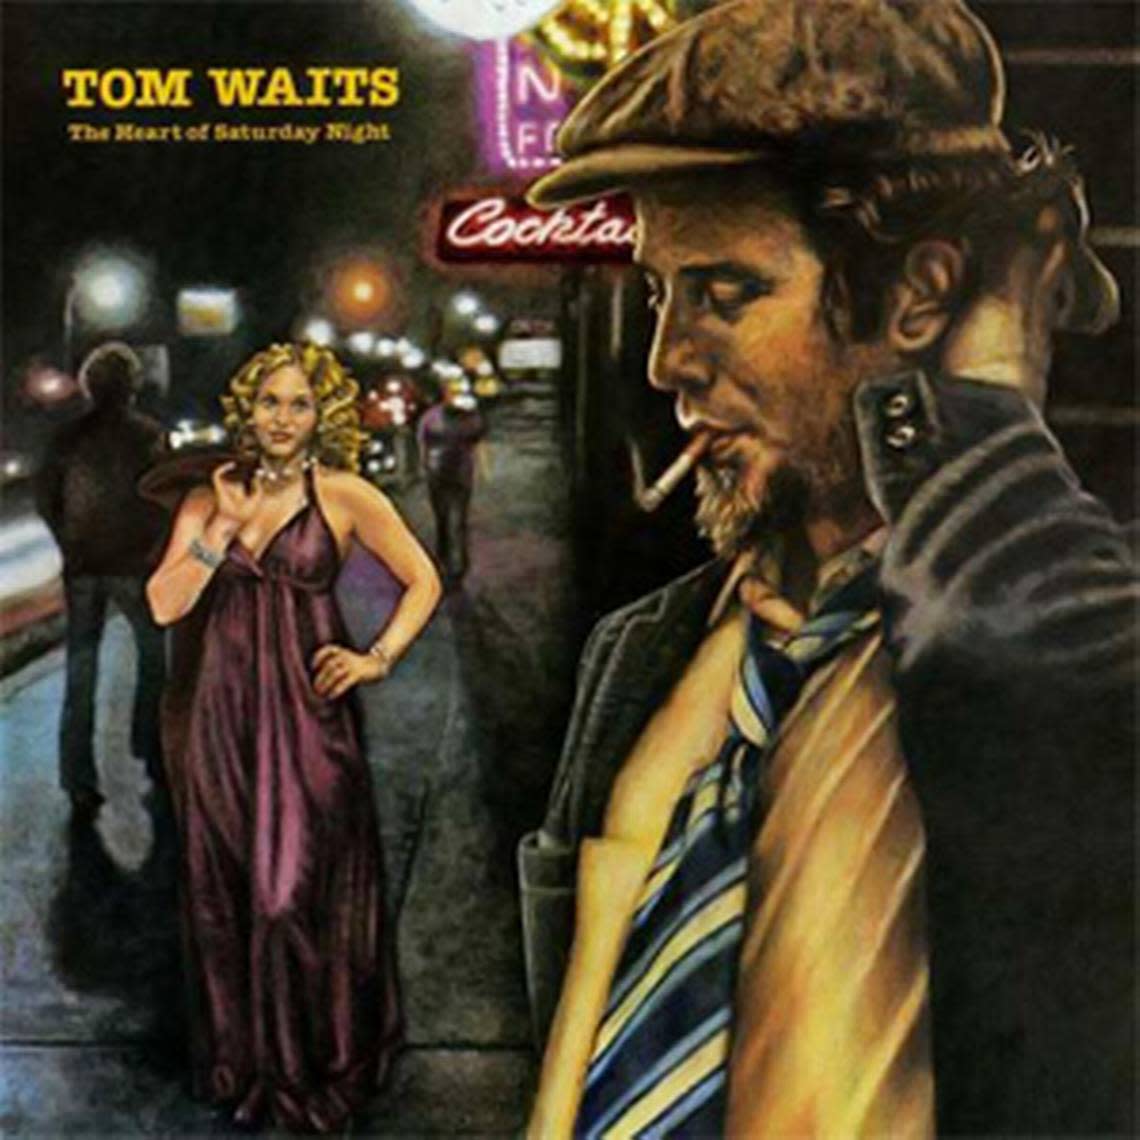 “The Heart of Saturday Night,” Tom Waits